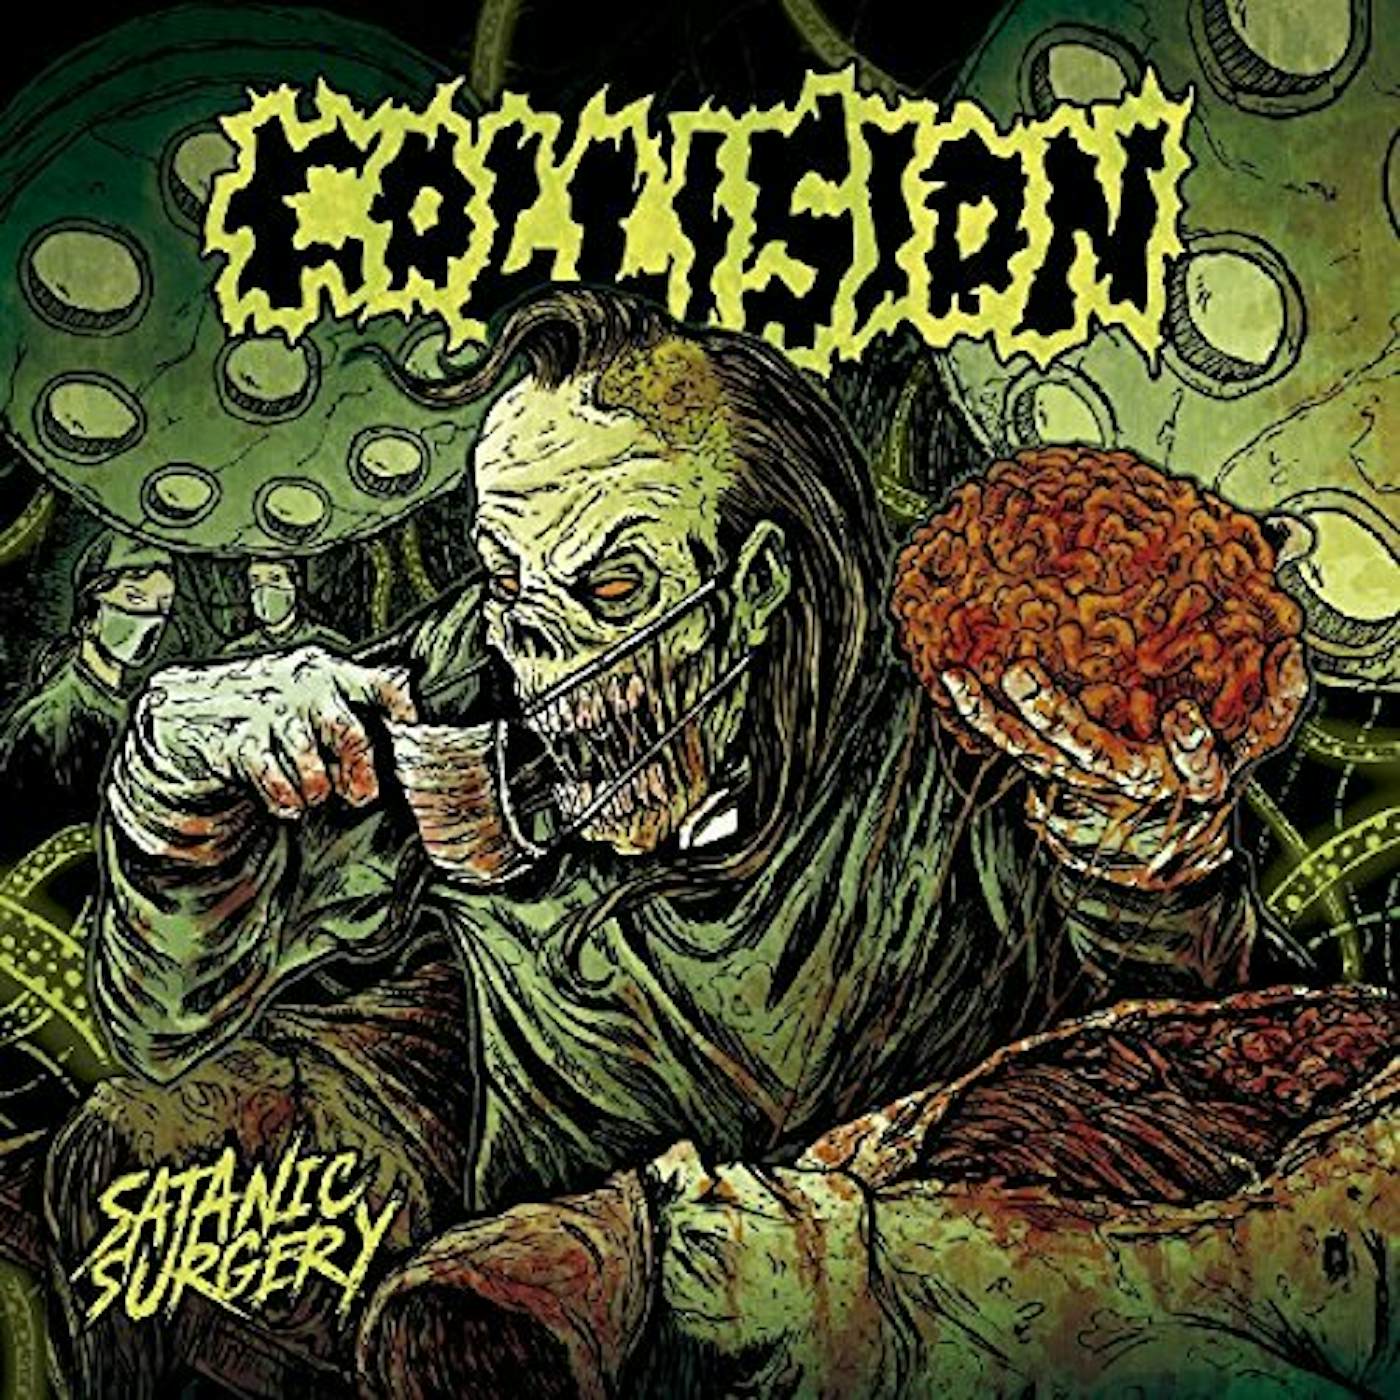 The Collision Satanic Surgery Vinyl Record